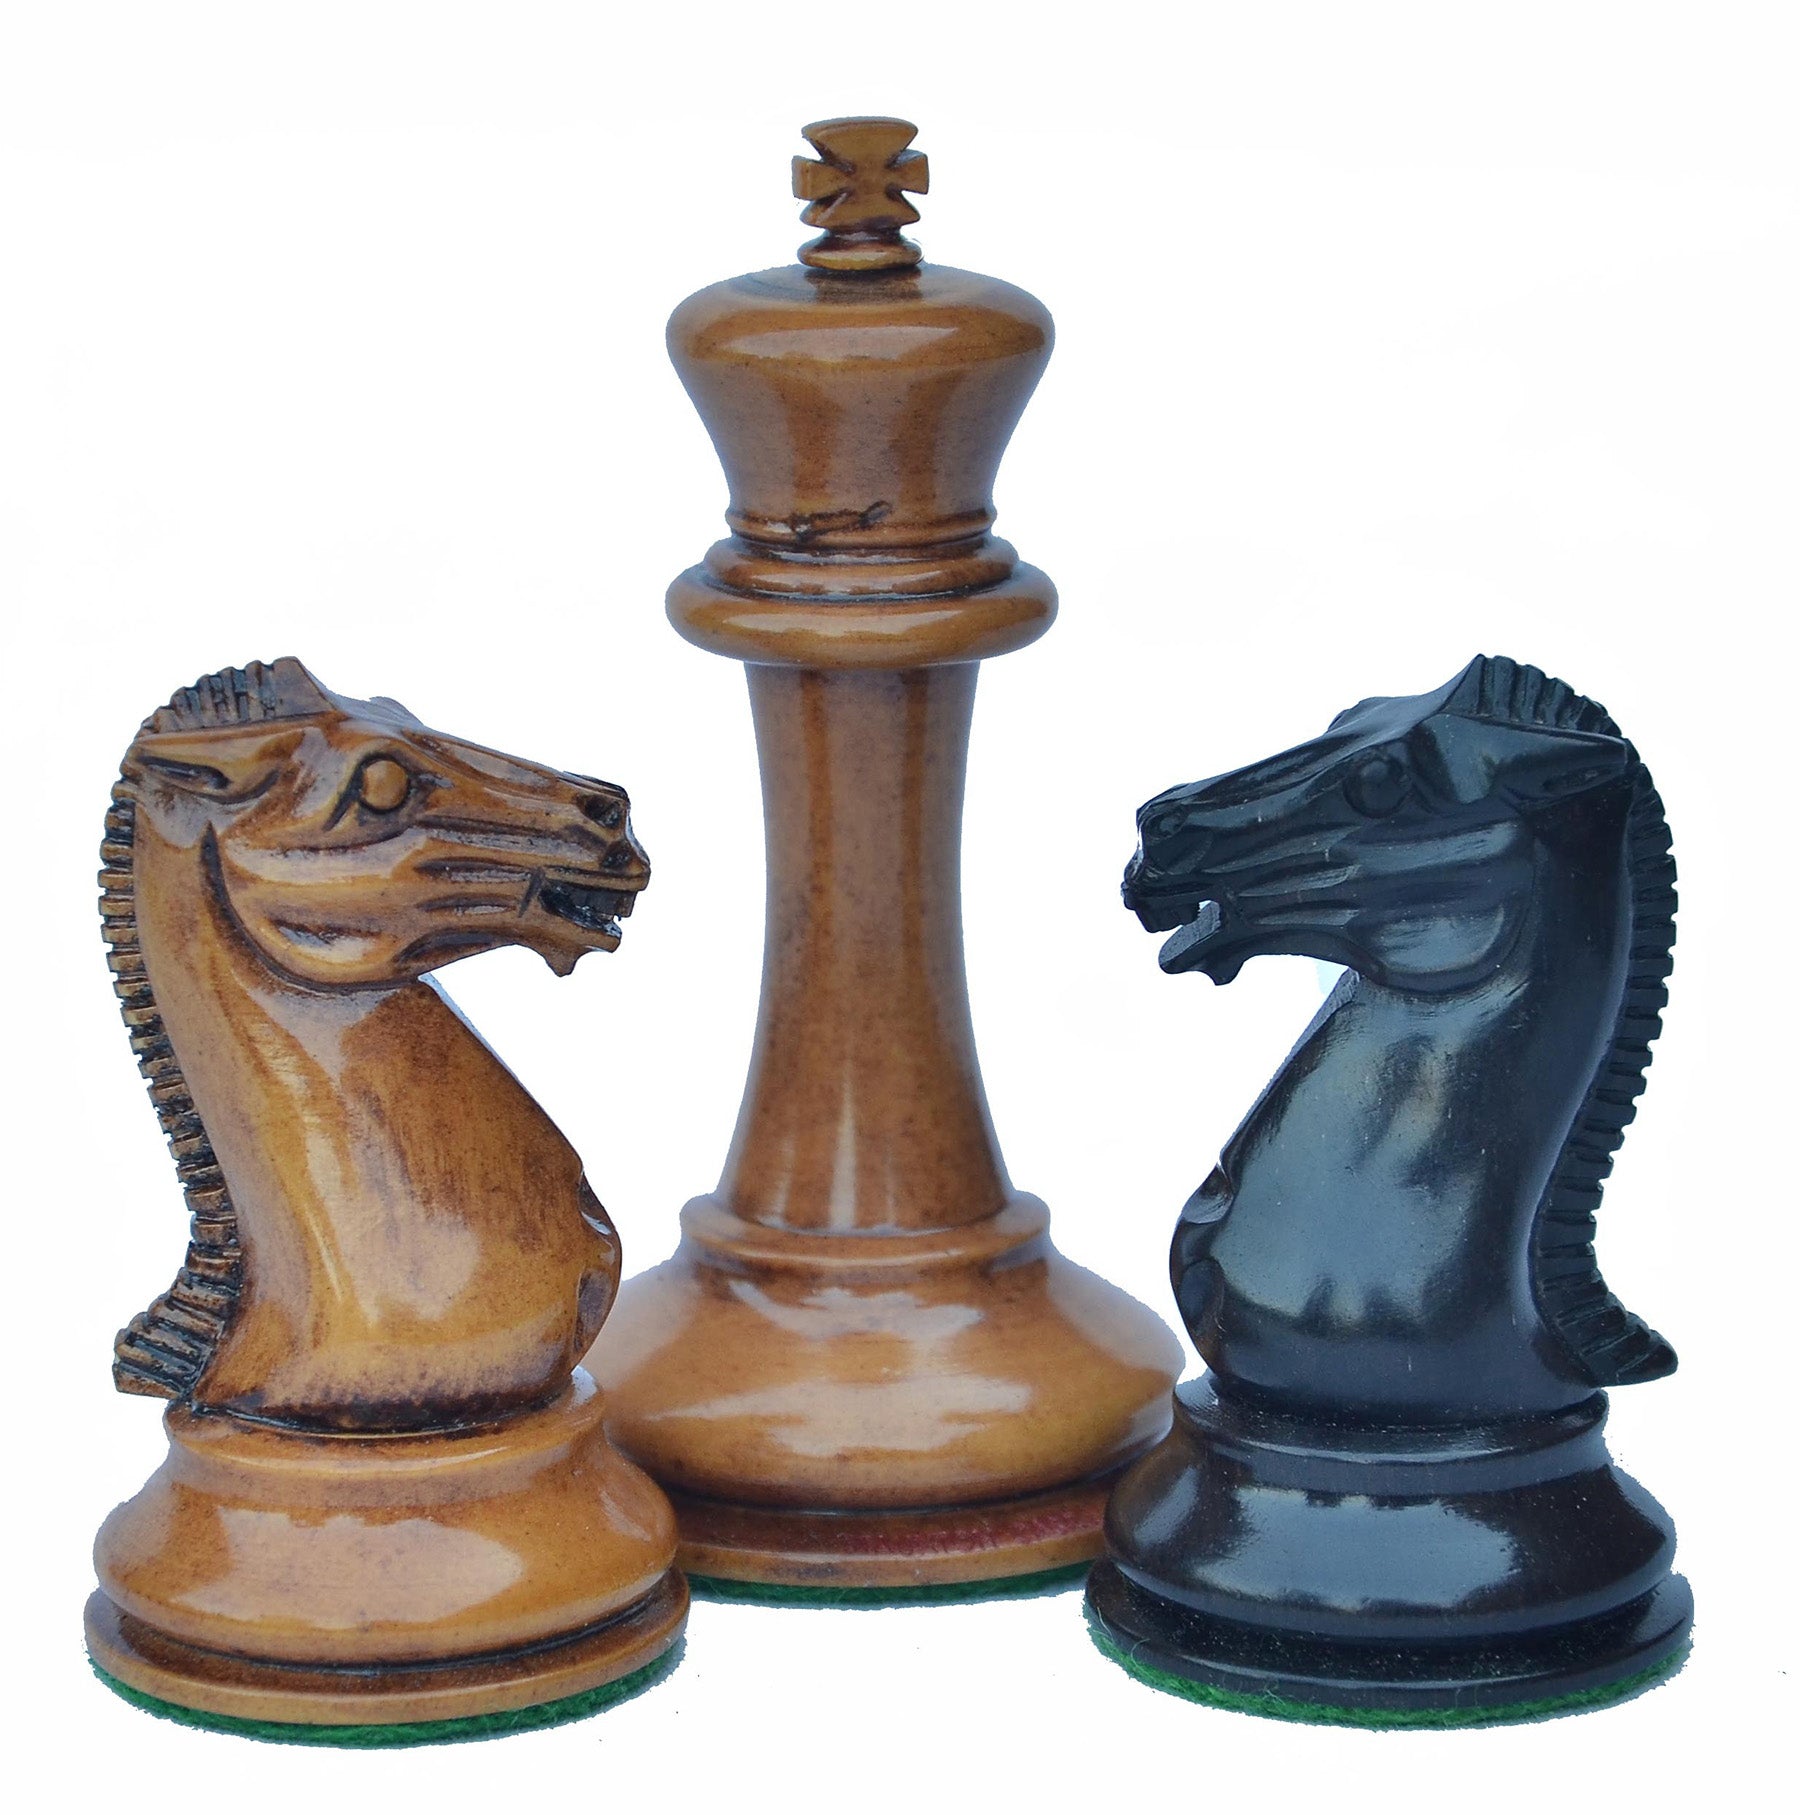 Walter Grimshaw 1854 Circa Reproduction Staunton Distressed Antiqued/Ebony Chess Set